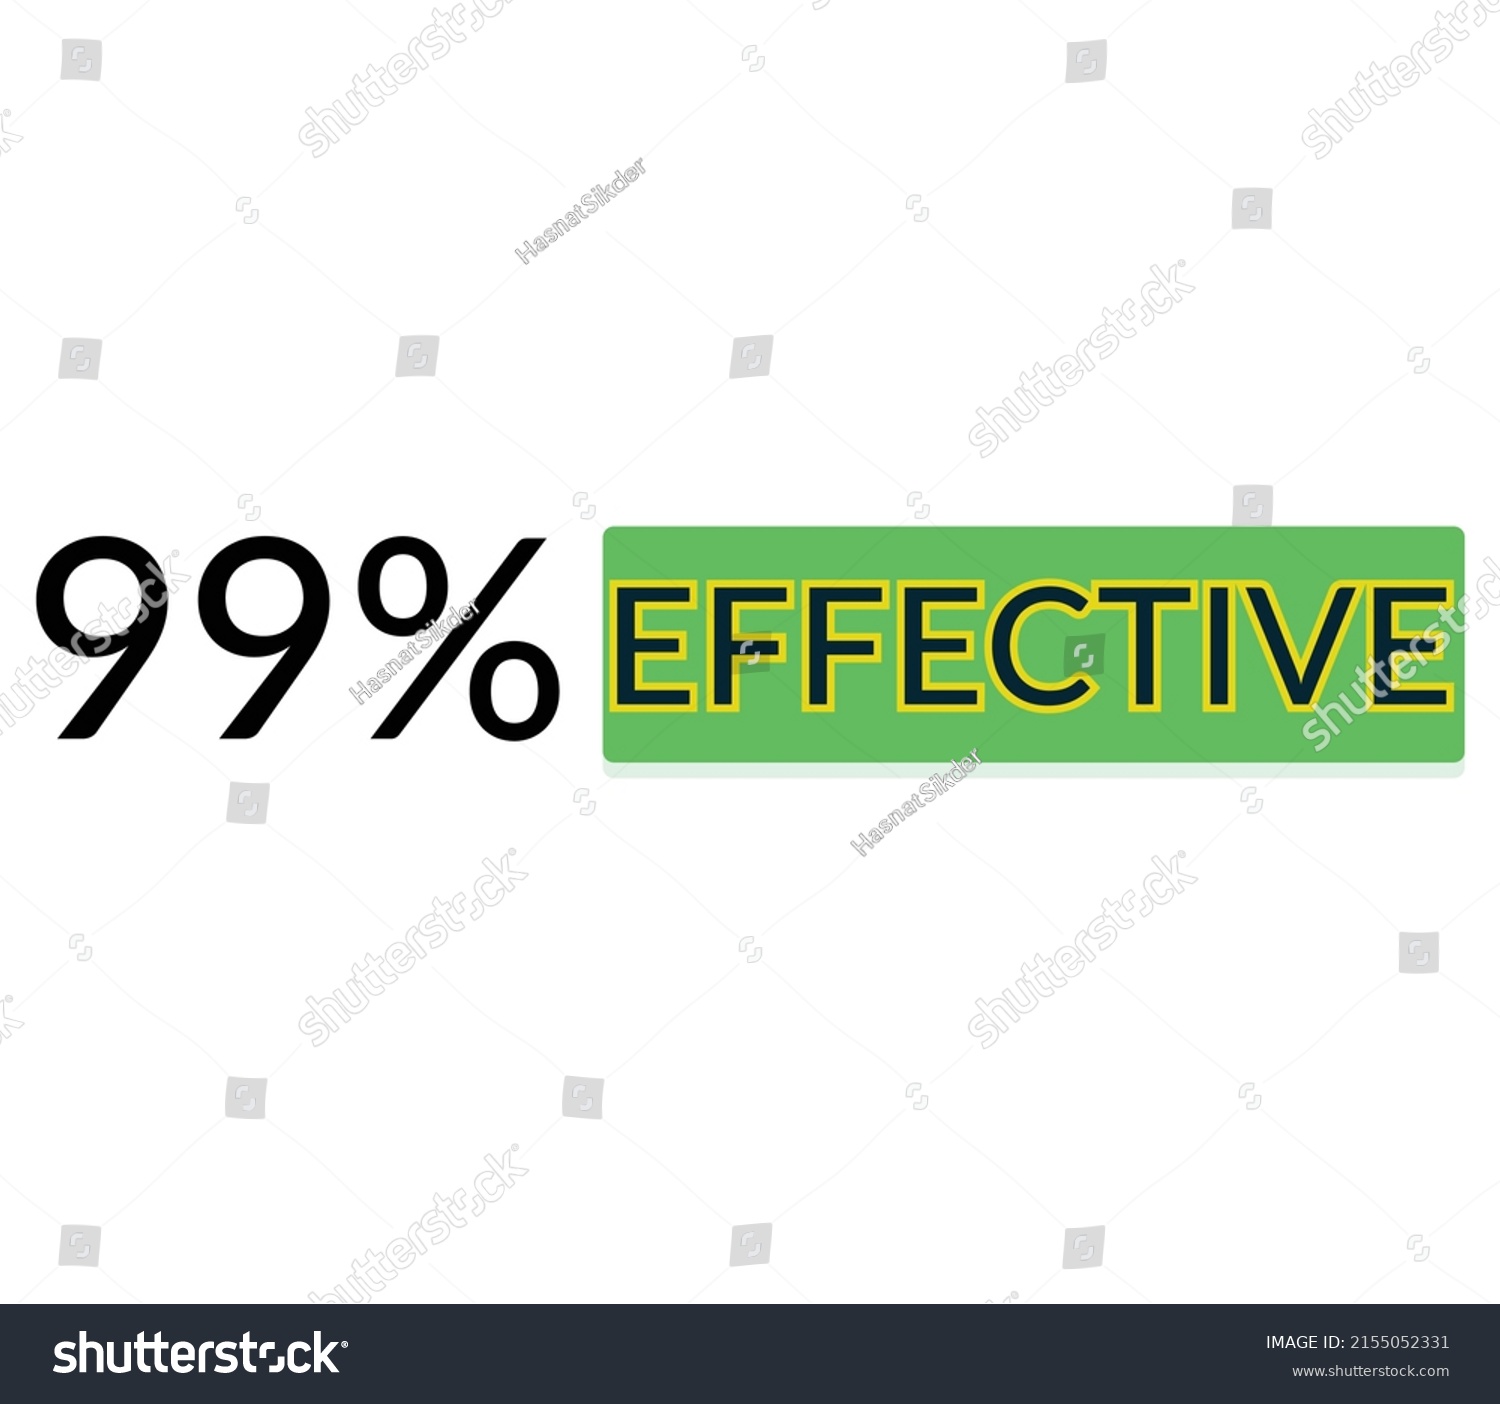 99% percentage effective sign label vector art illustration with fantastic font and green color #2155052331